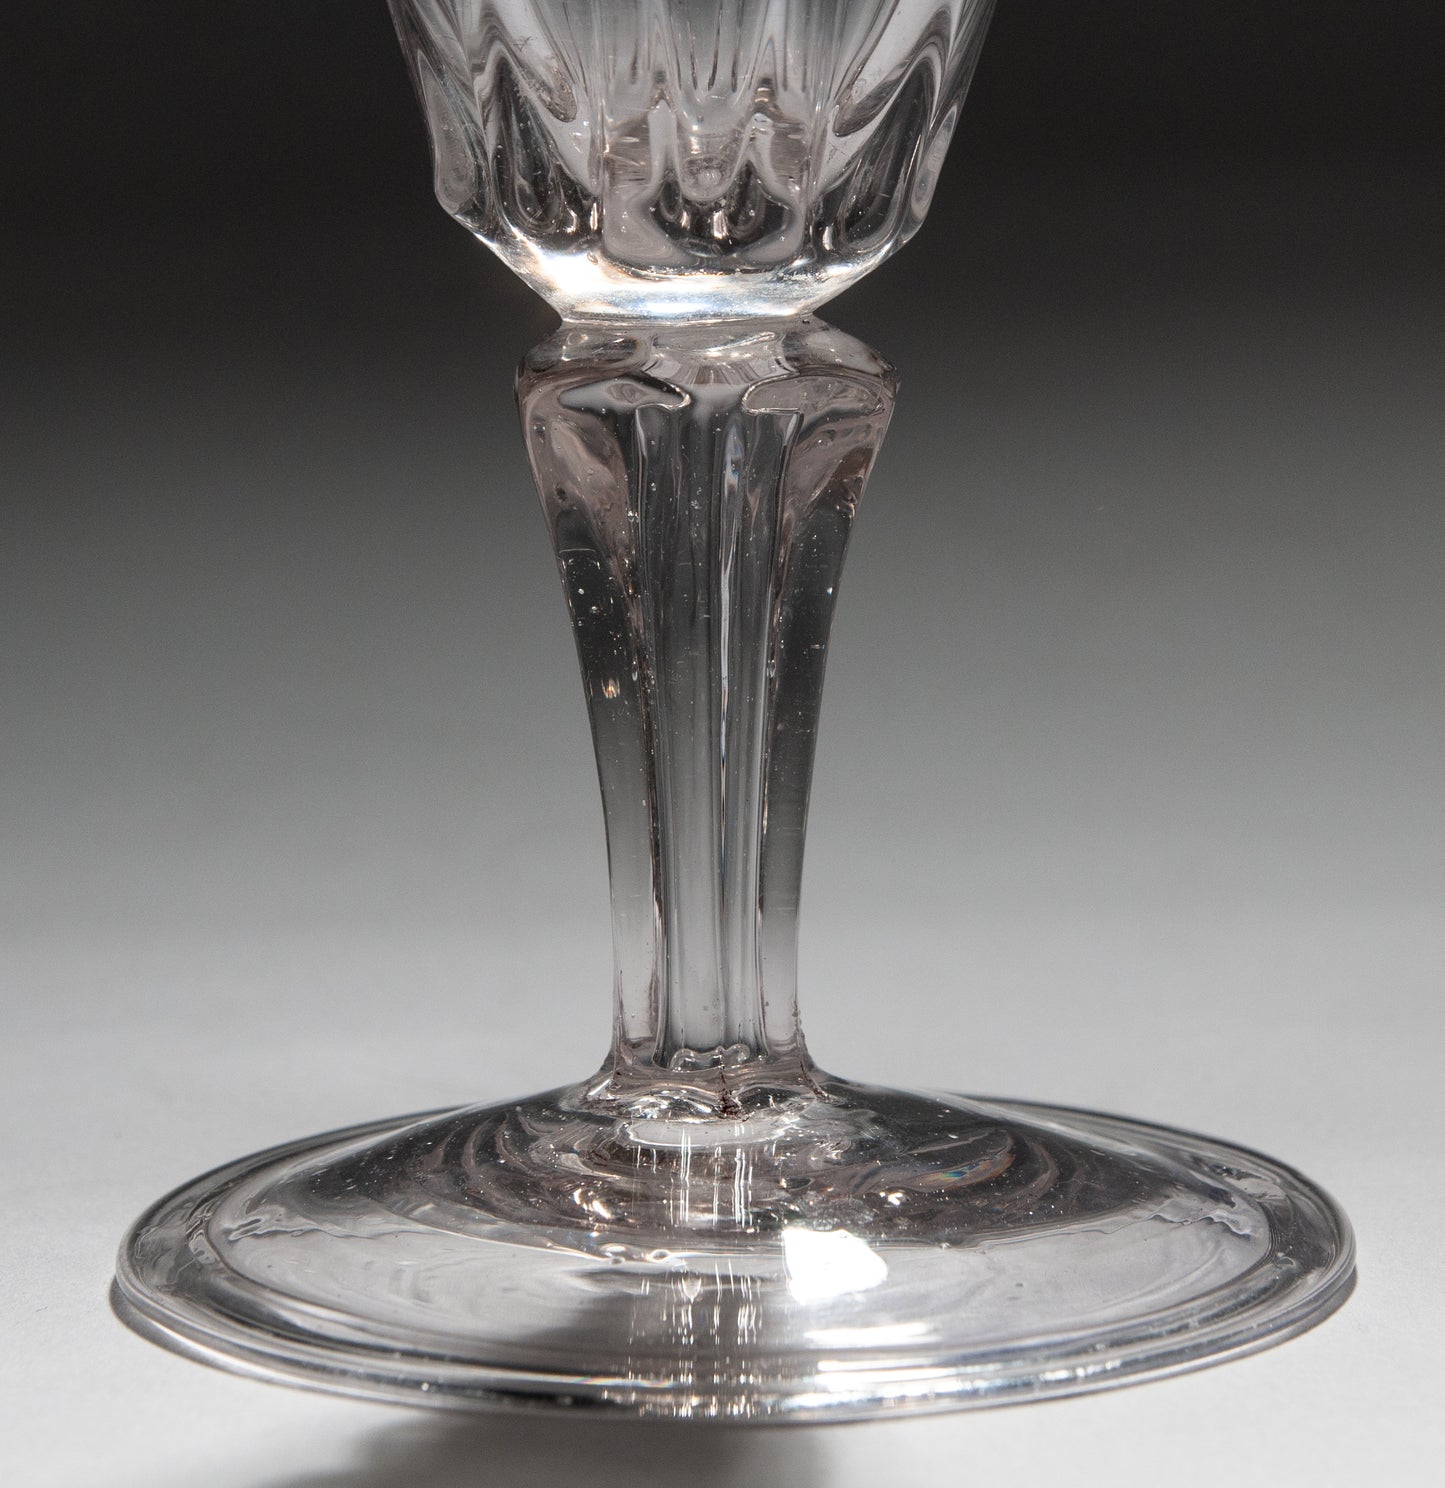 Antique Georgian Period Bohemian Silesian Engraved Glass Wine Goblet c1780 (Code 1247)